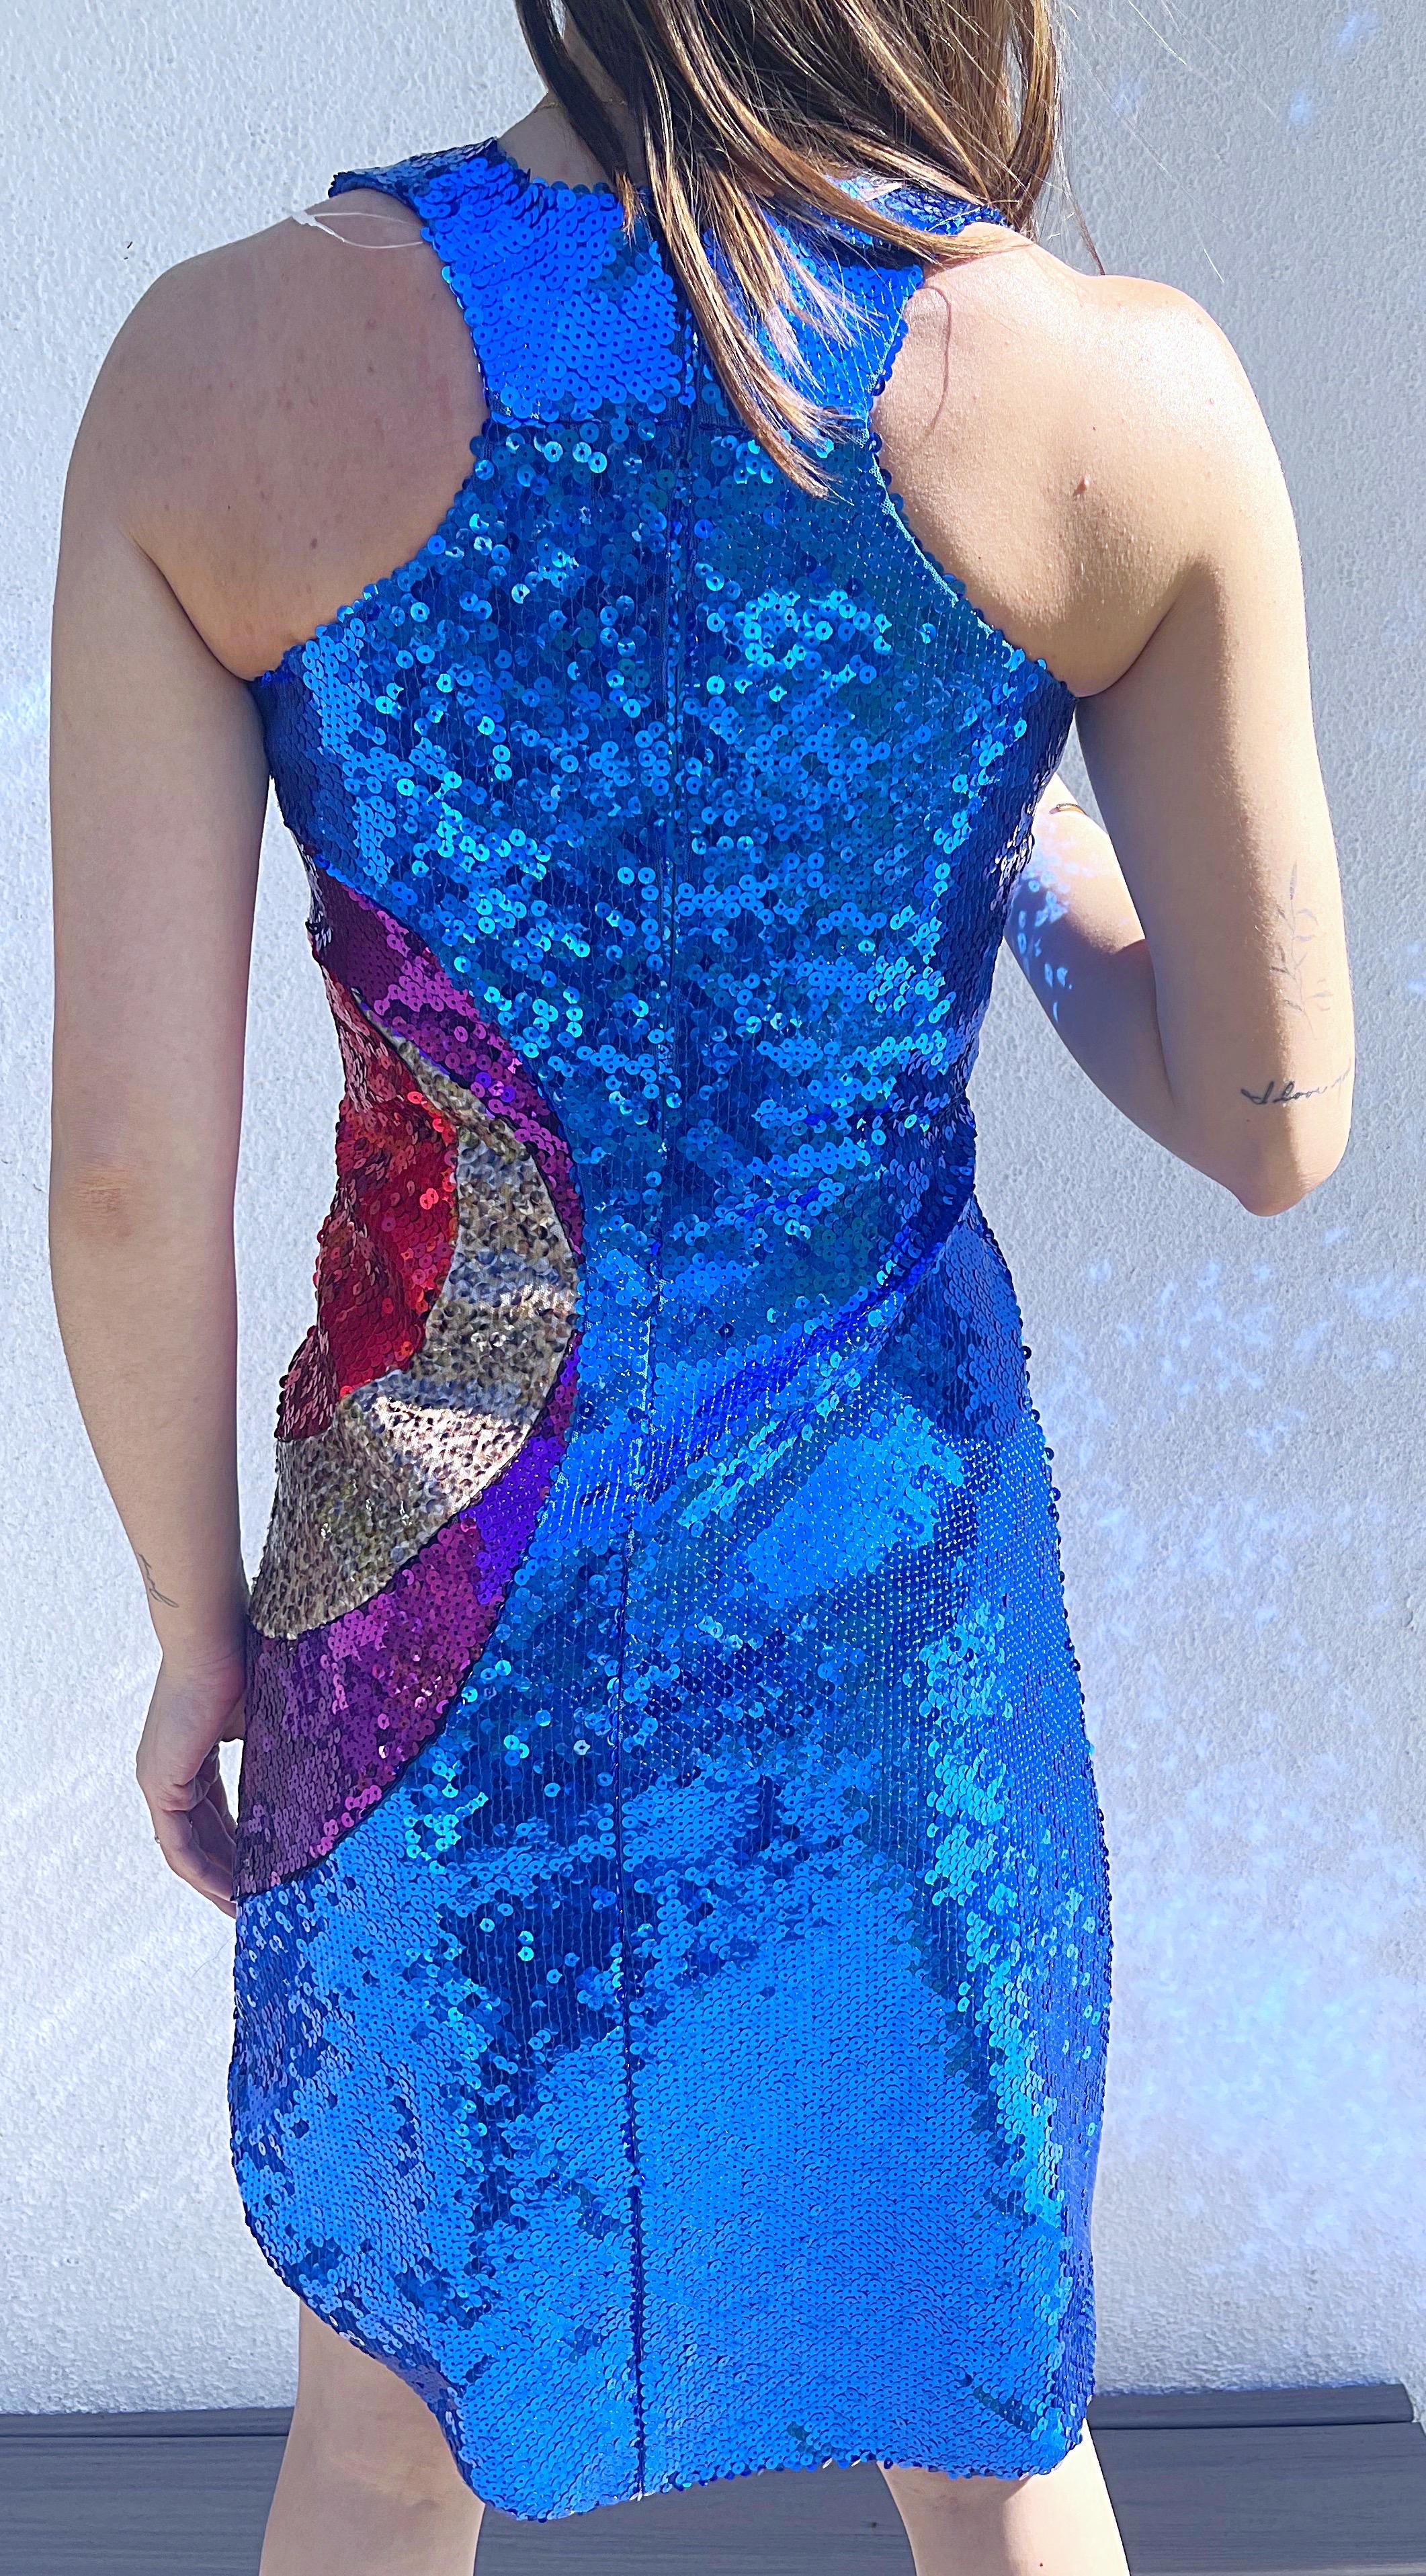 Women's CD Greene NWT $3.8 K Size 2 / 4 Bullseye Blue 2000s Sequin Hi-Lo Space Age Dress For Sale